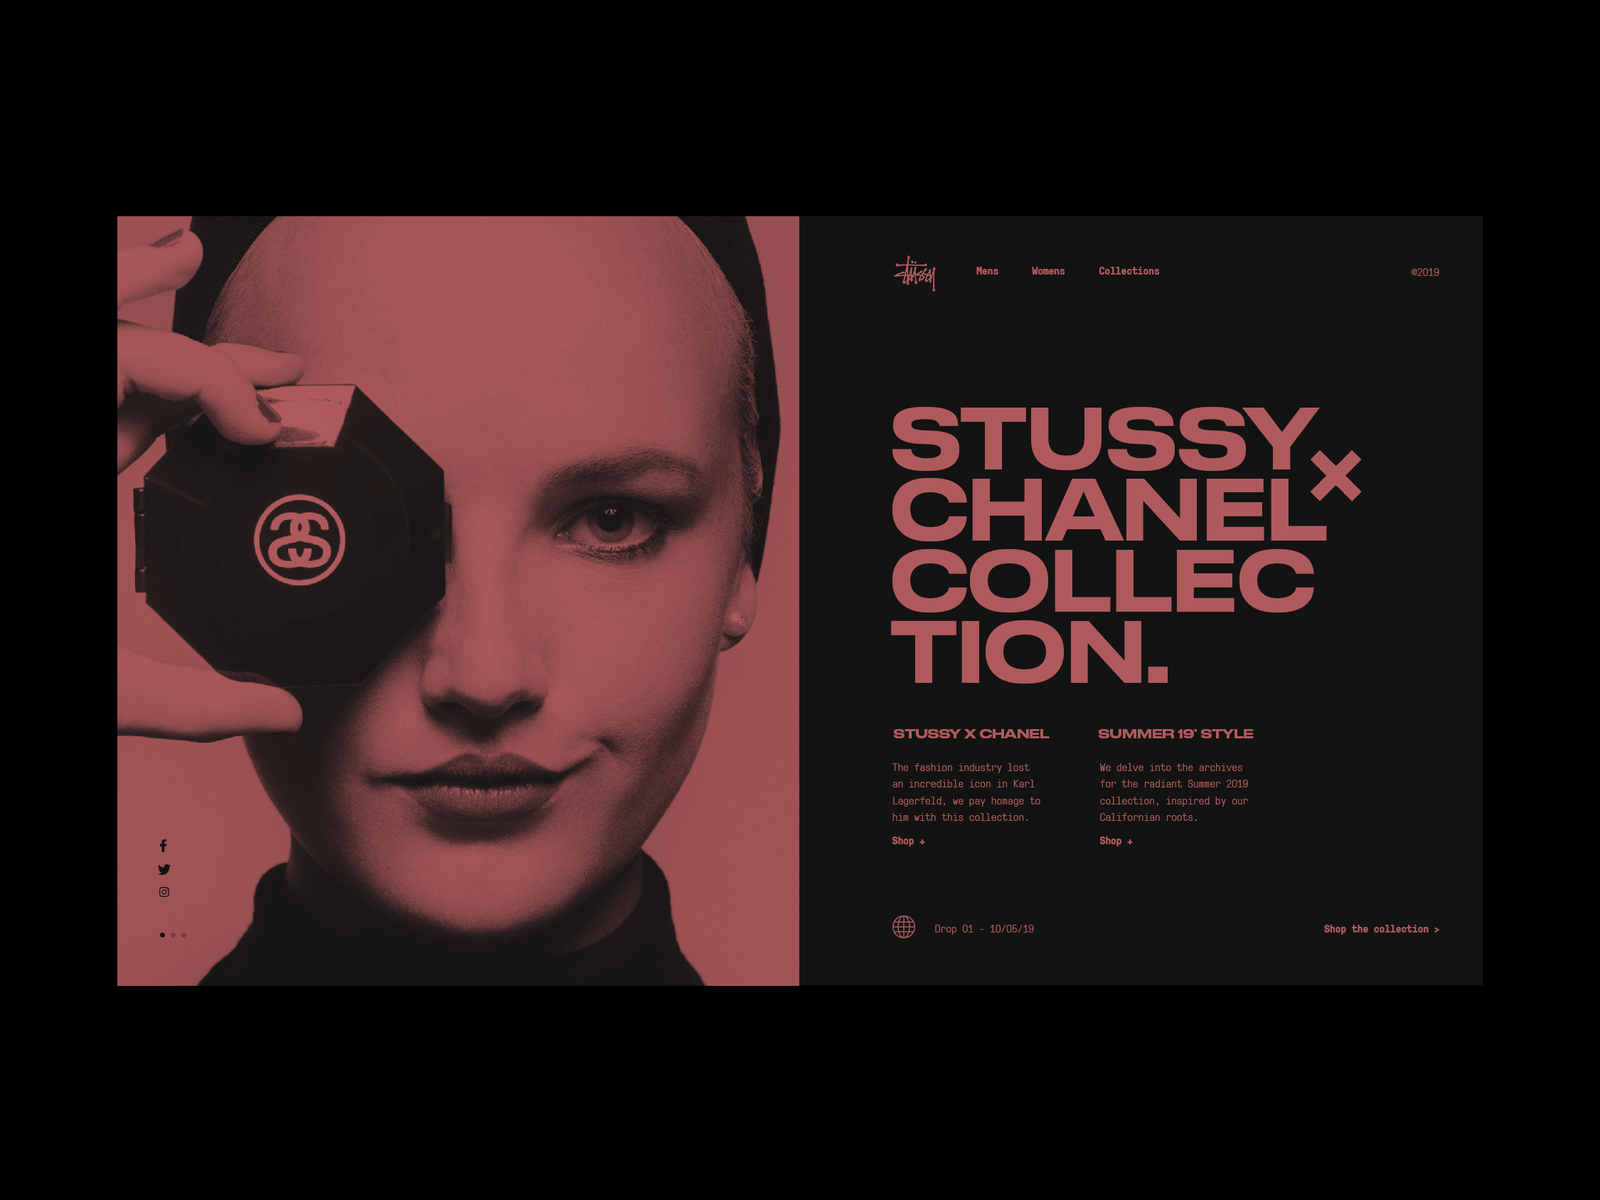 Stussy x Chanel by Sam Thompson on Dribbble